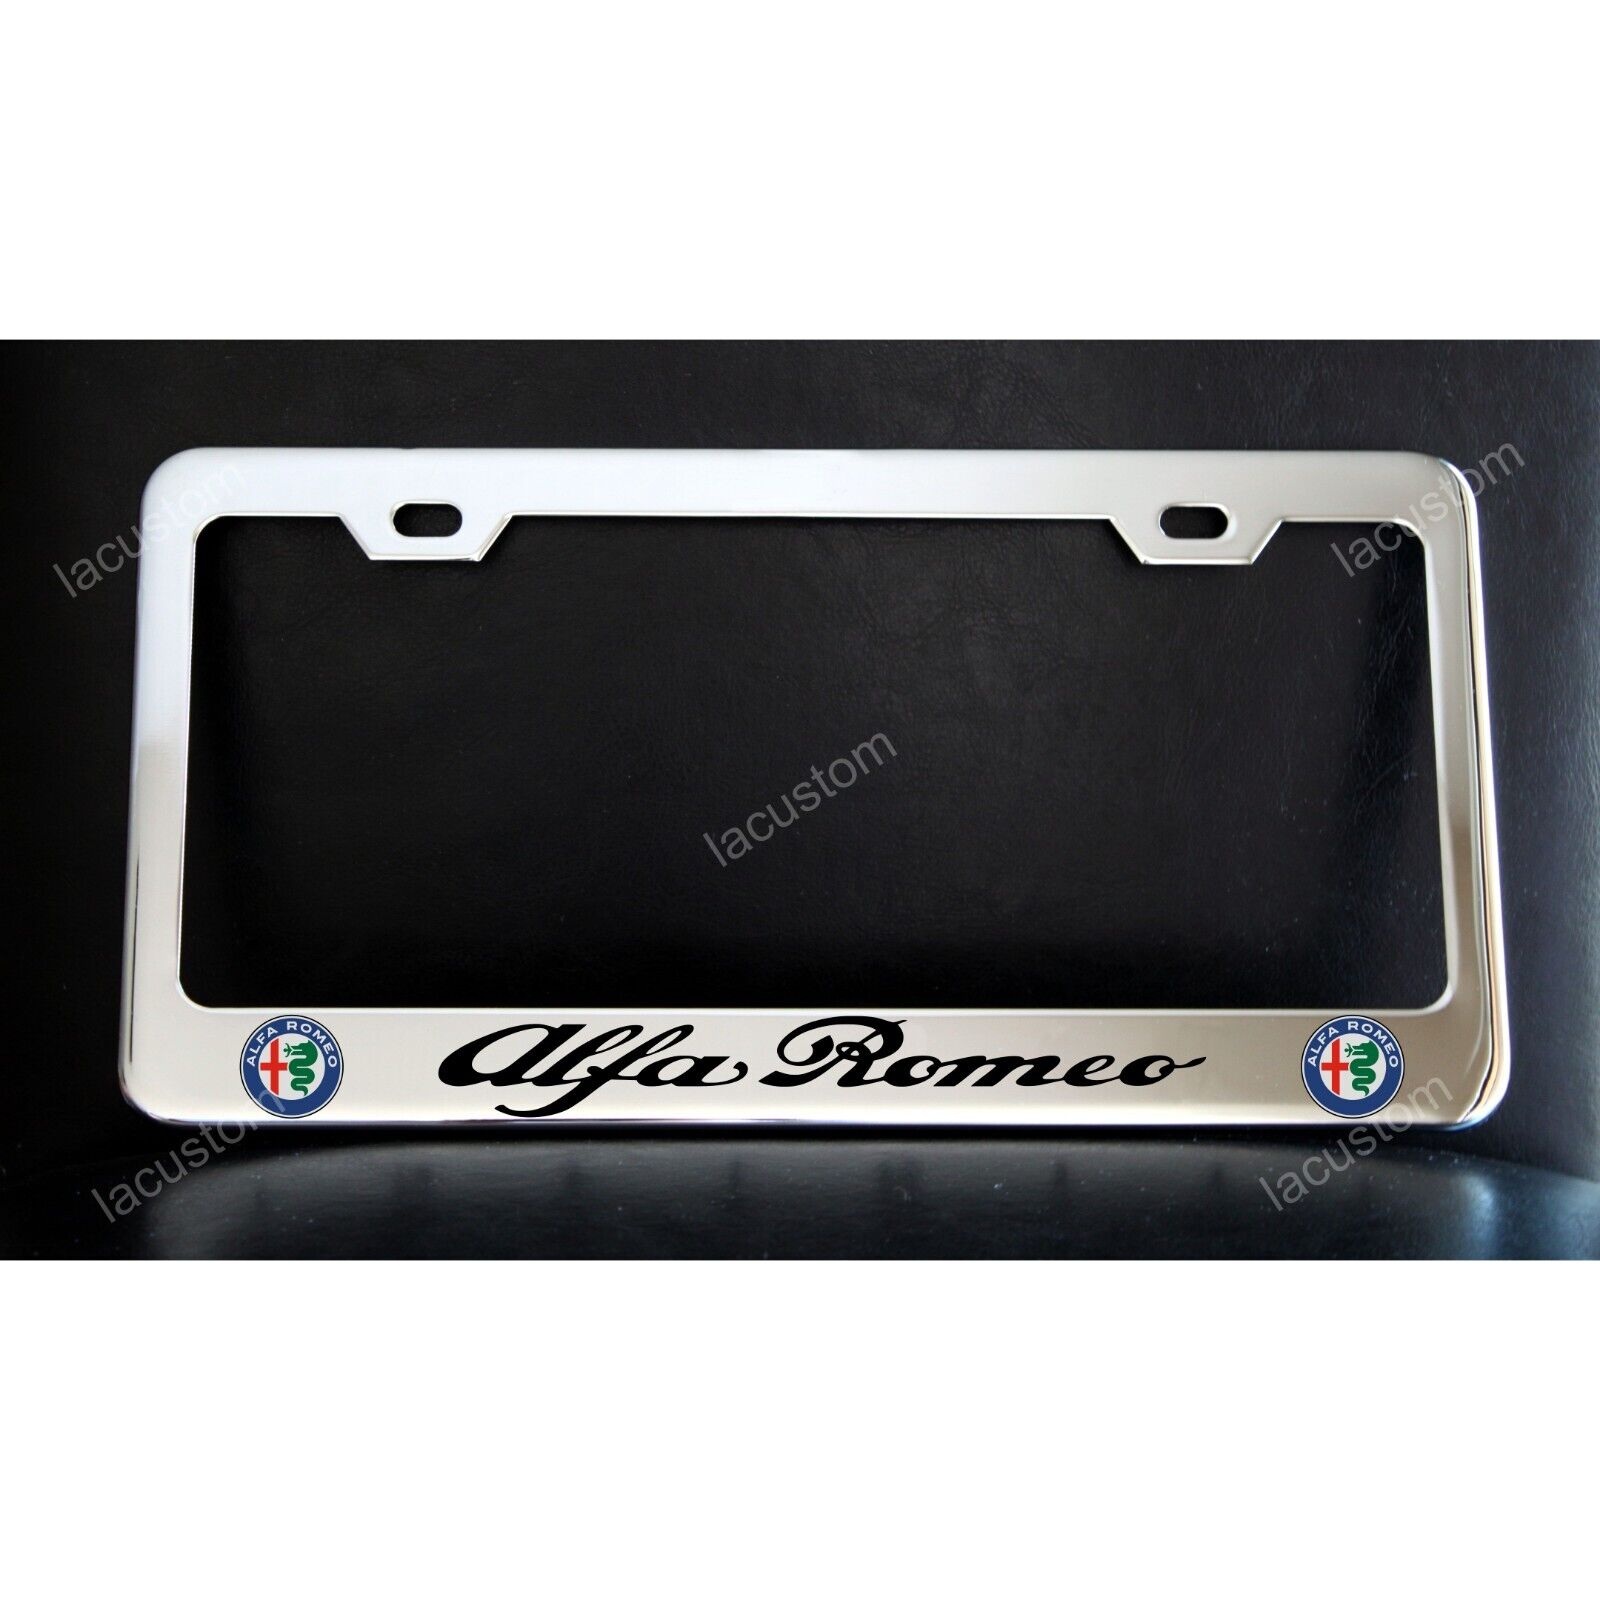 Alfa Romeo License Plate Frame Custom Made of Chrome Plated Metal